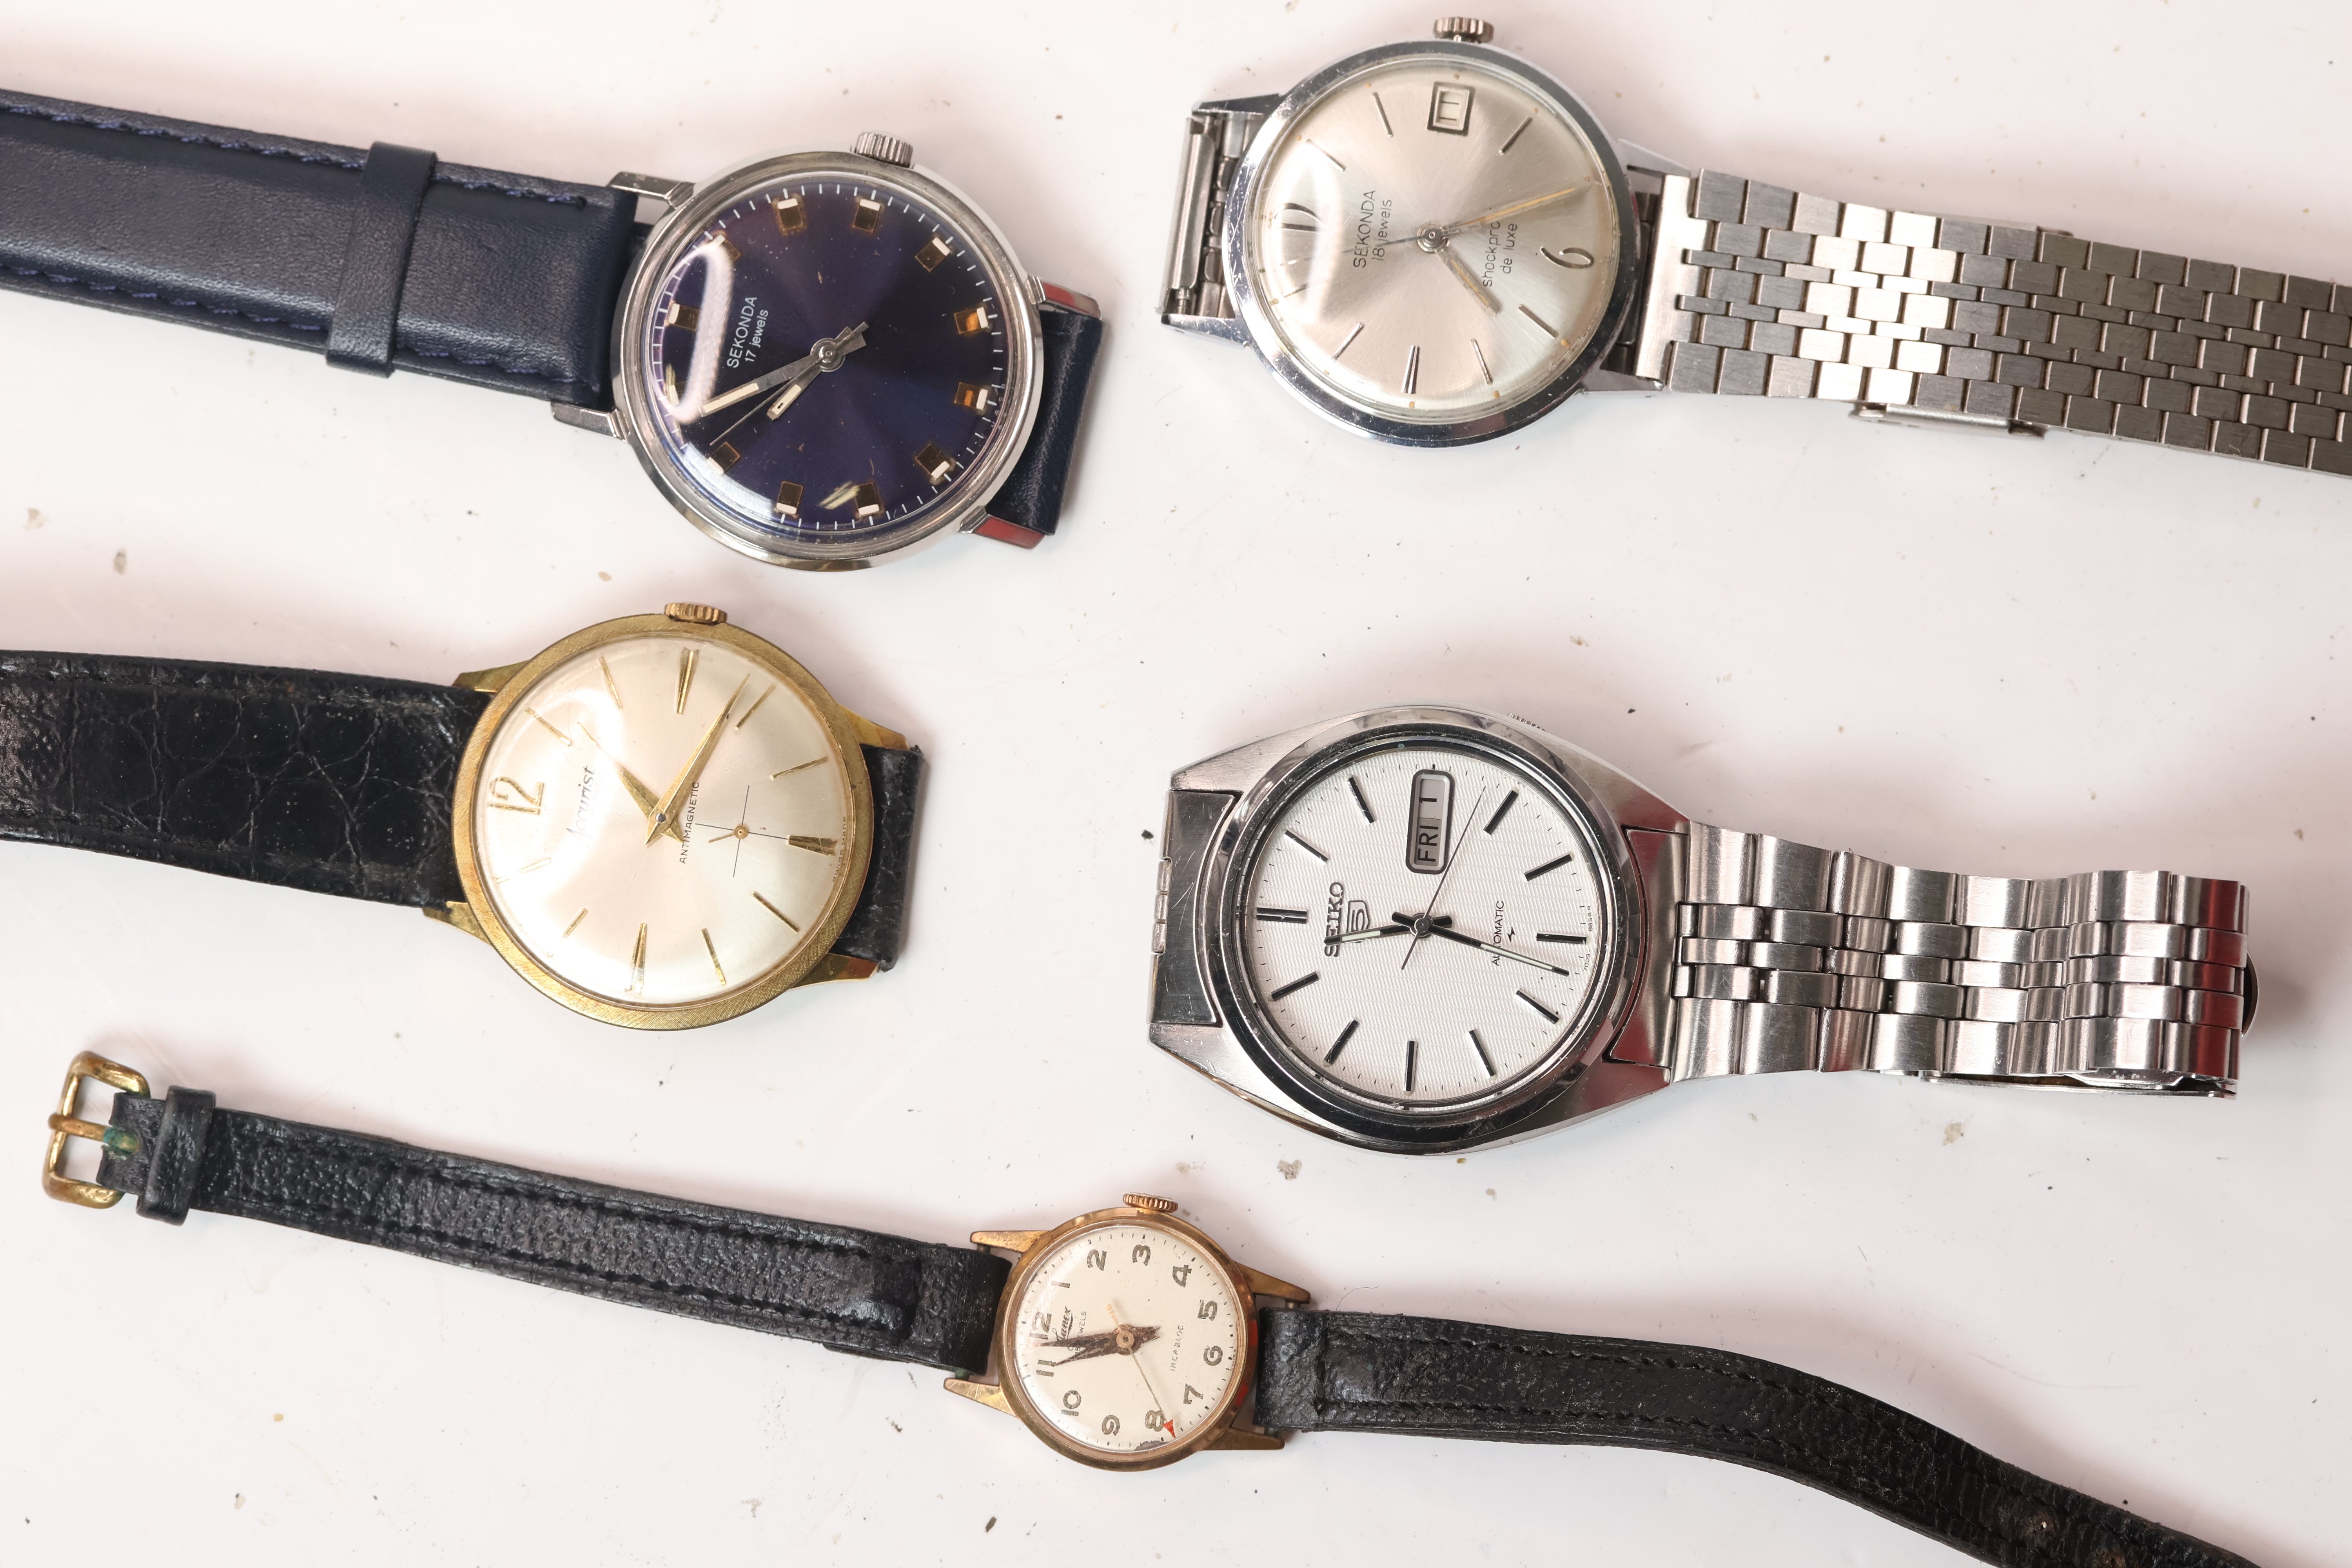 Job lot of 5 watches, including Sekonda, Seiko & more *AS FOUND*